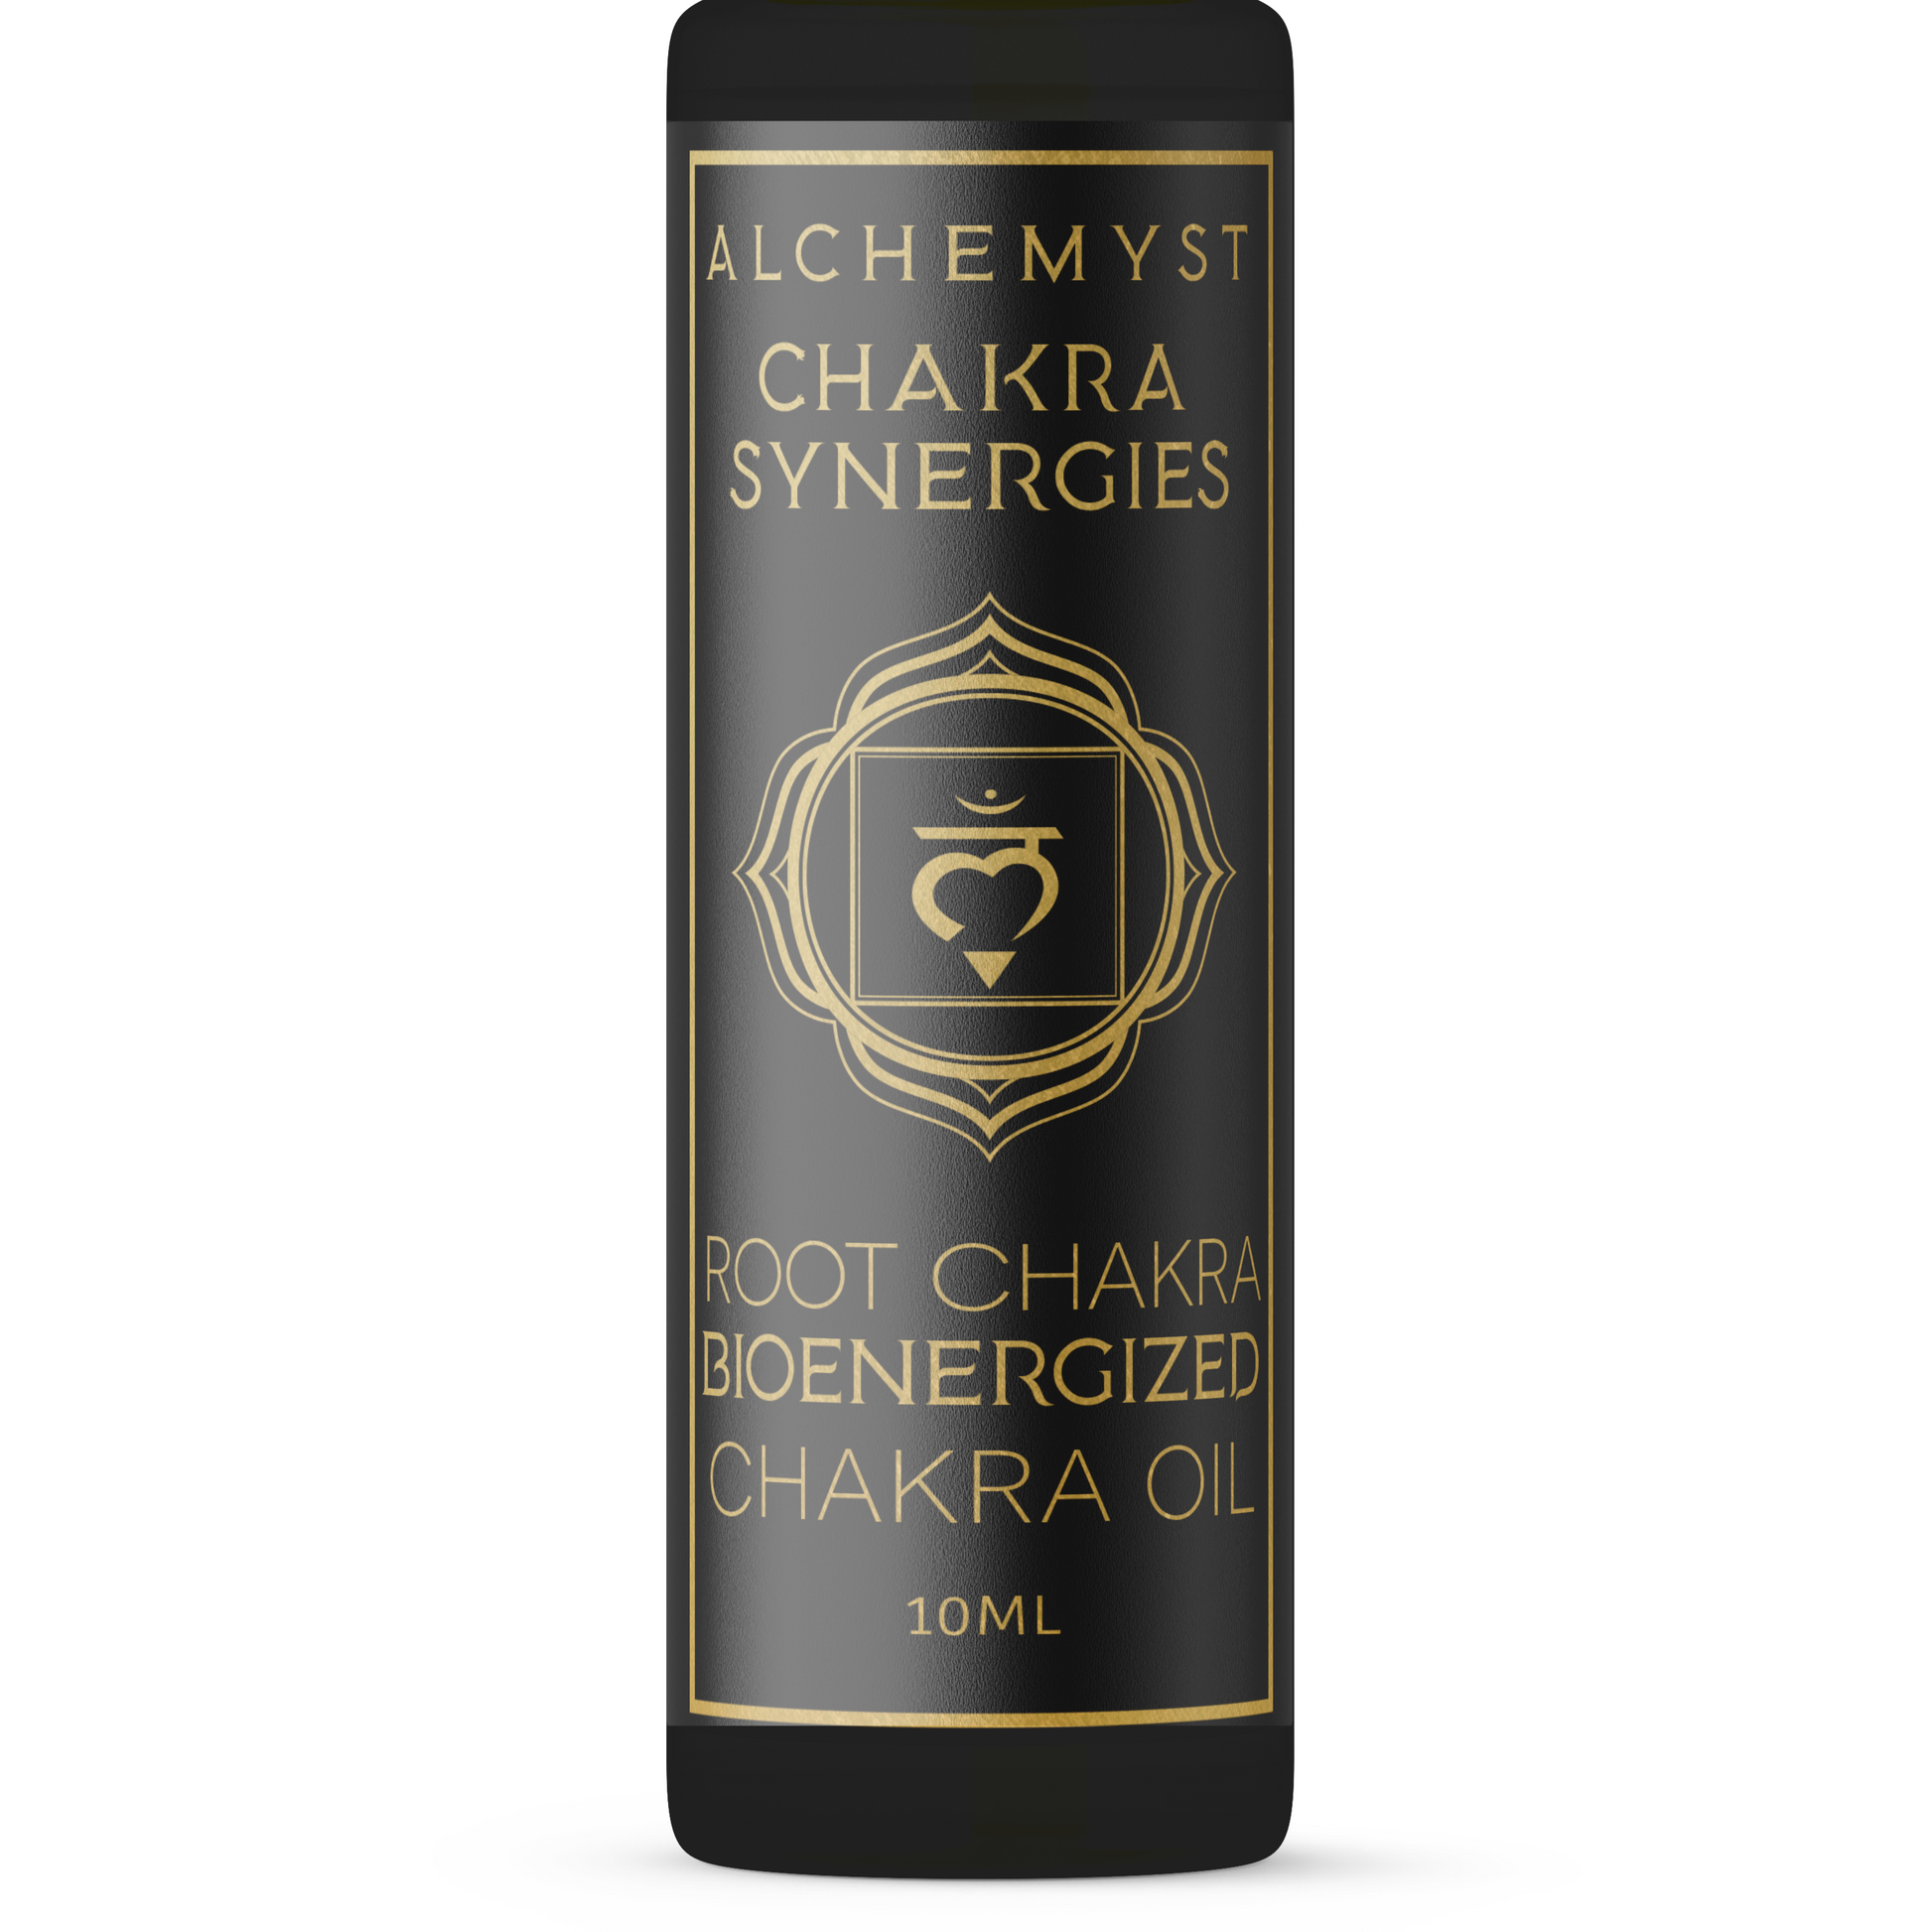 Muladhara Bioenergized Root Chakra Aromatherapy | Chakra Synergies Alchemyst Co